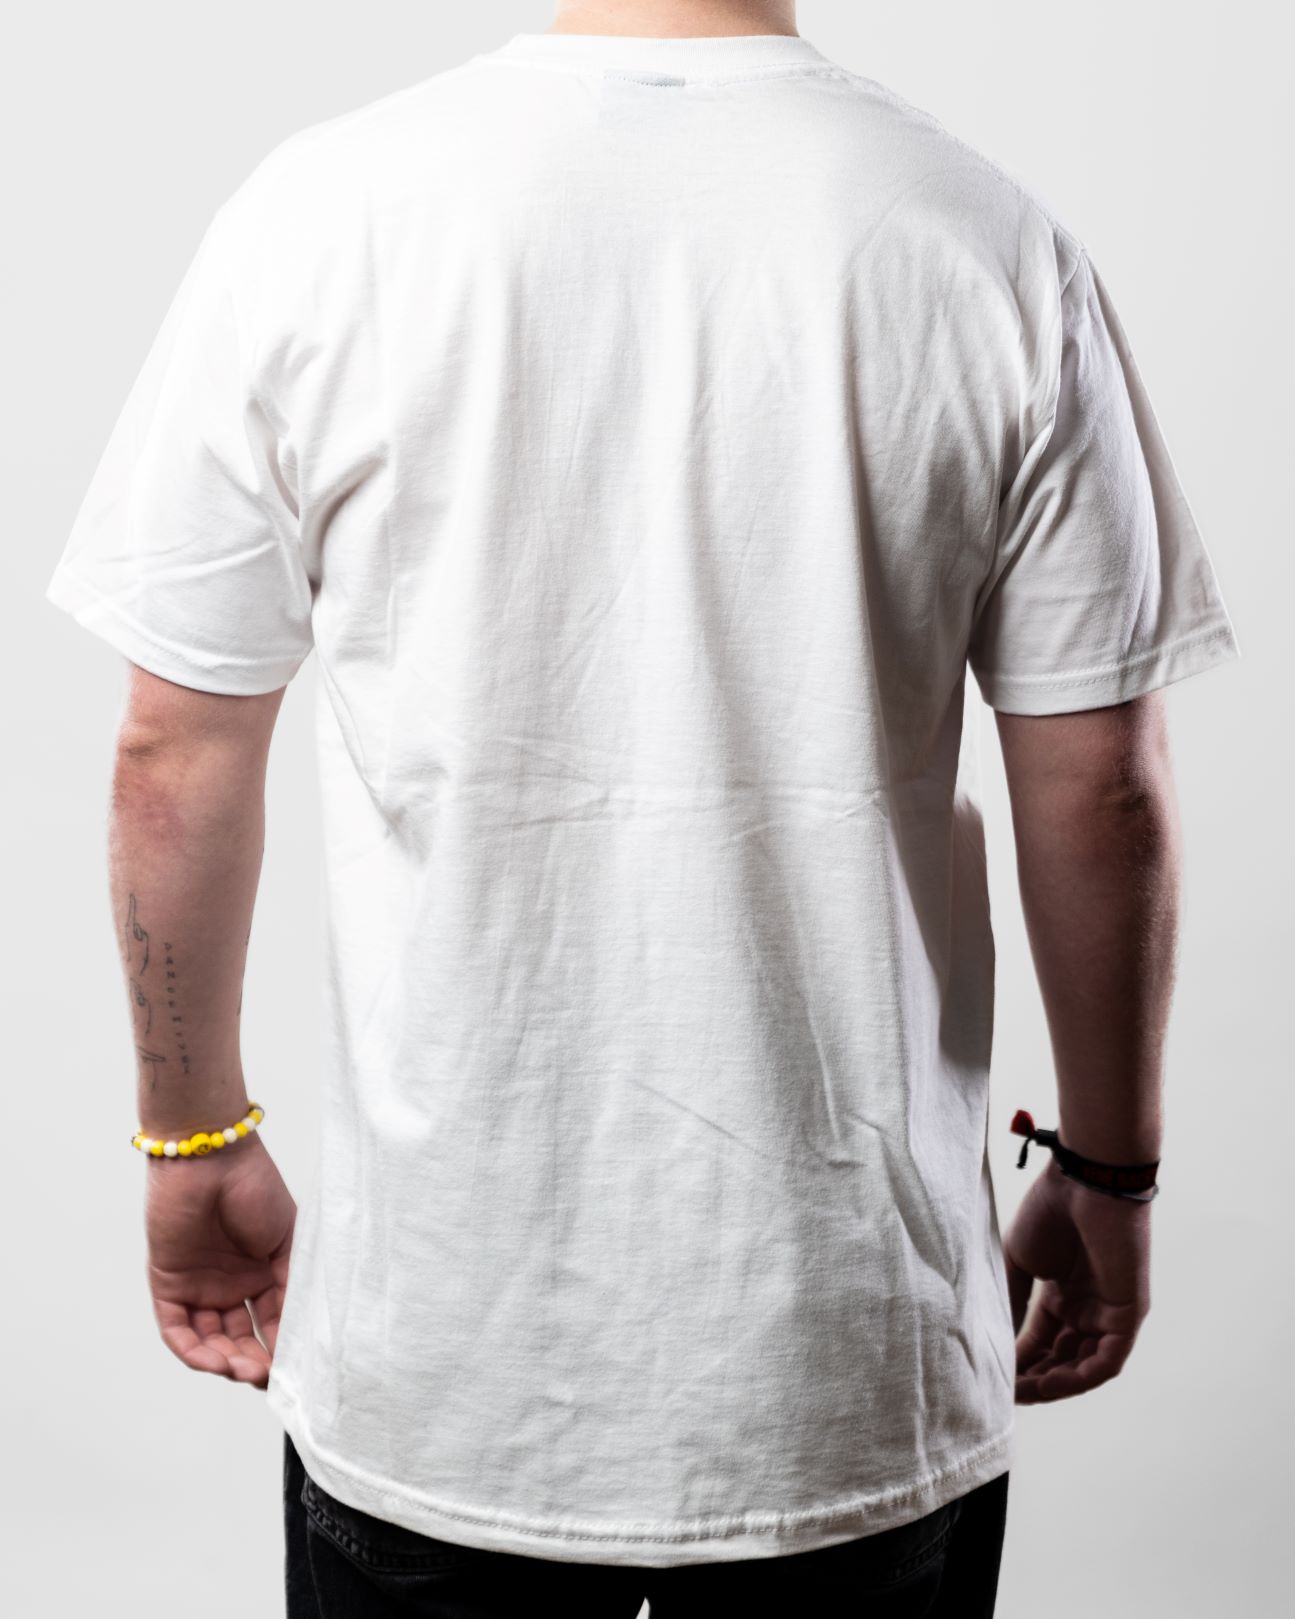 Wilthener Goldkrone x 102Boyz T-Shirt weiß